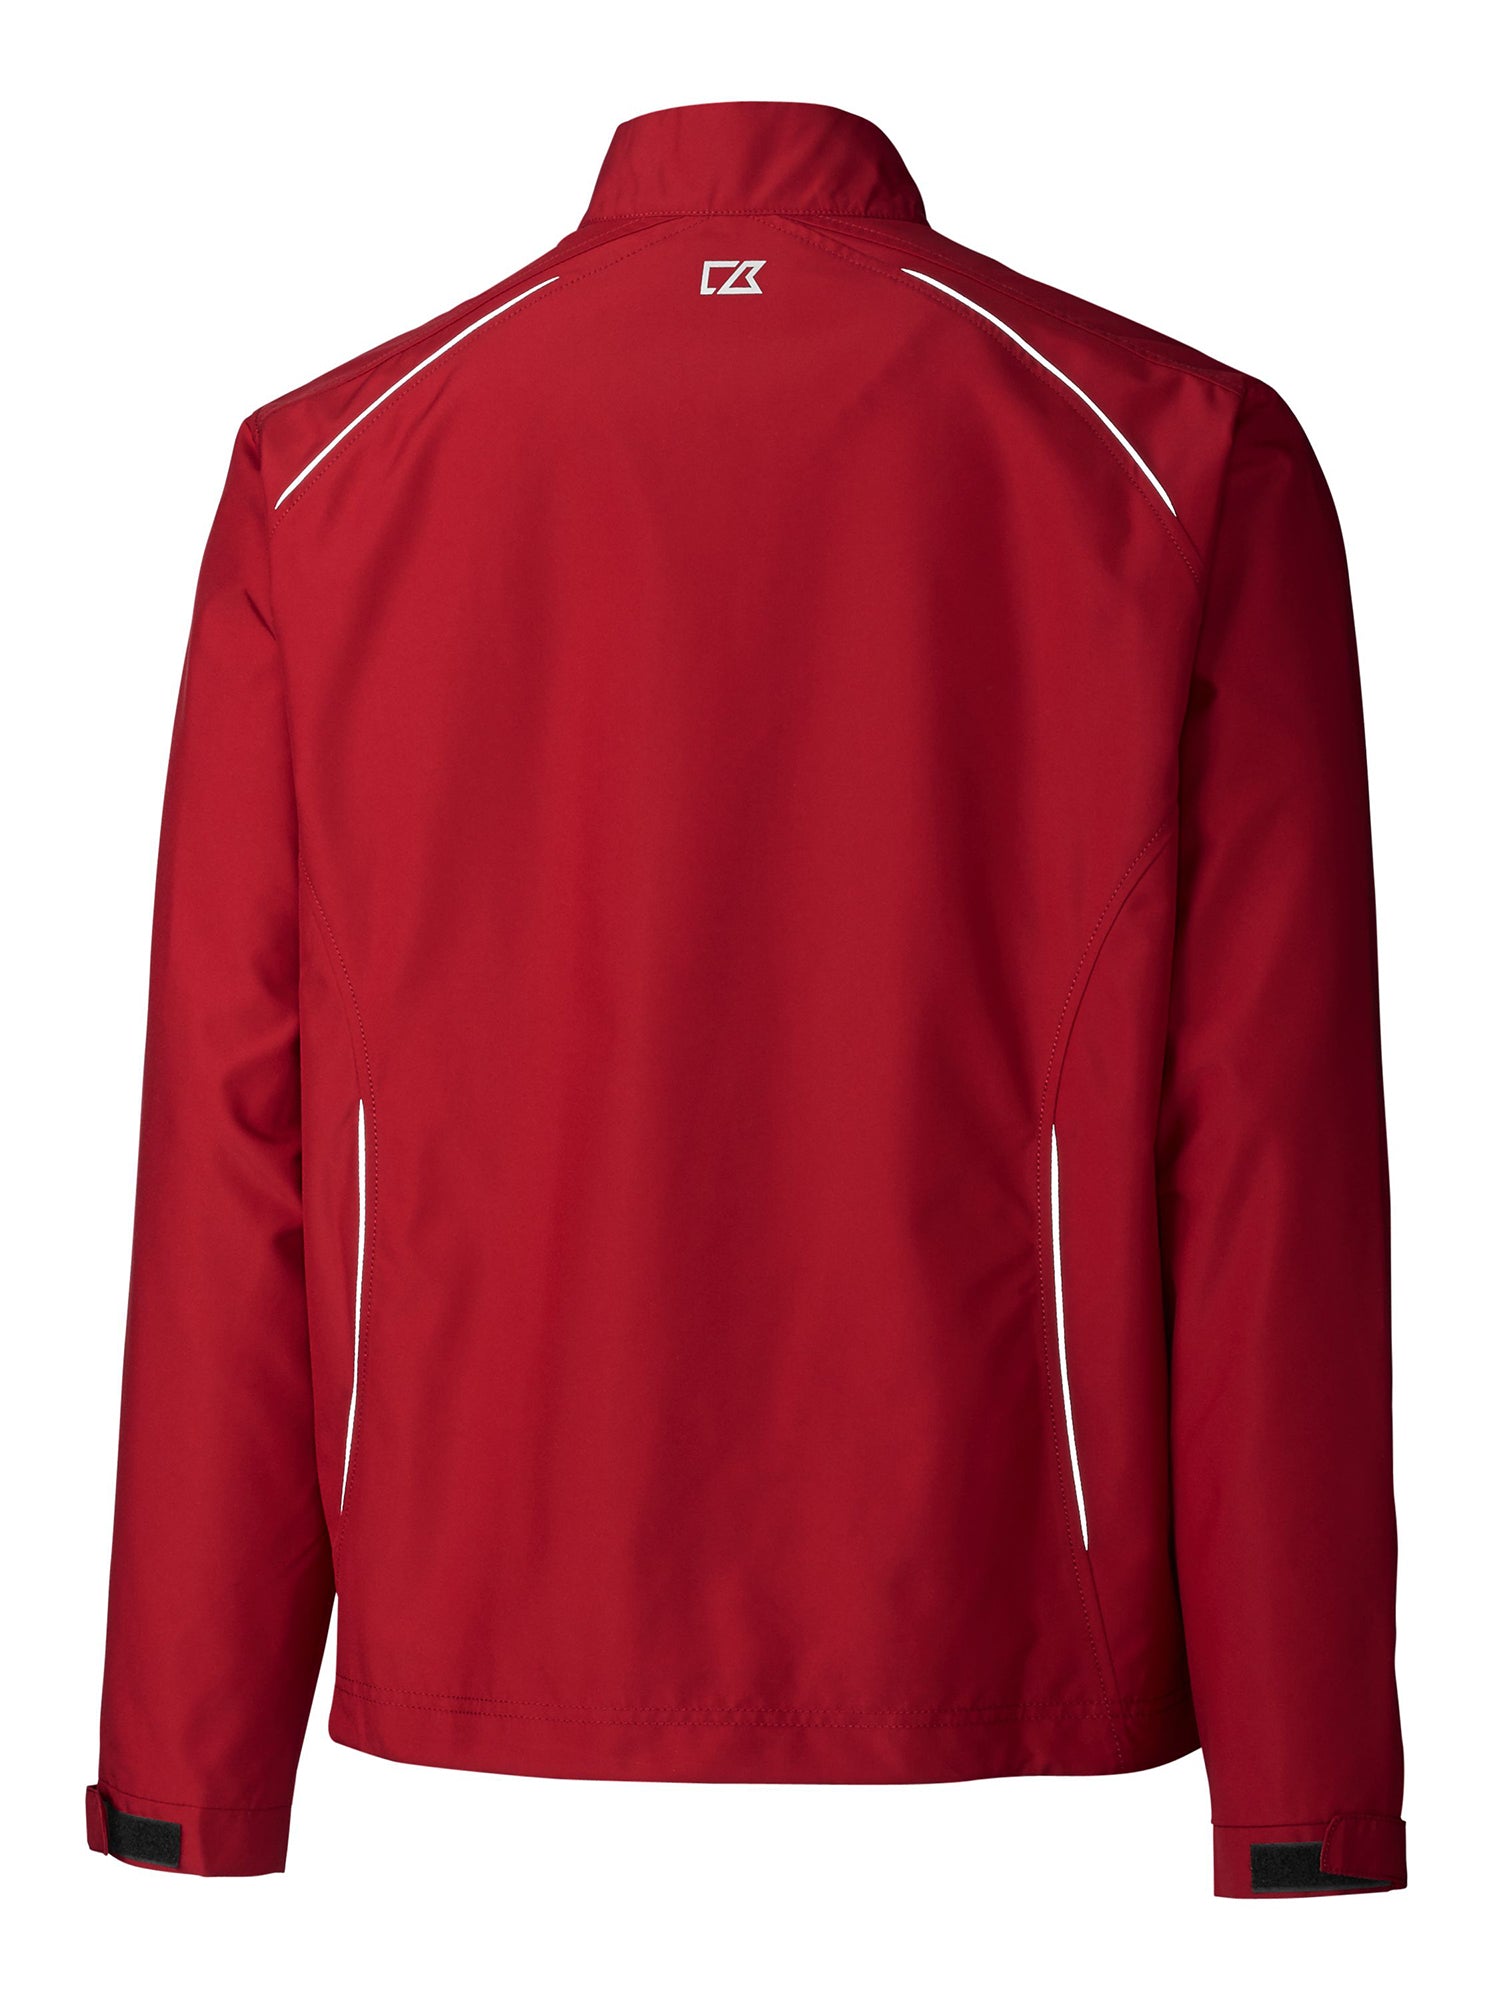 Cutter & Buck Beacon Full Zip Jacket in Cardinal Red